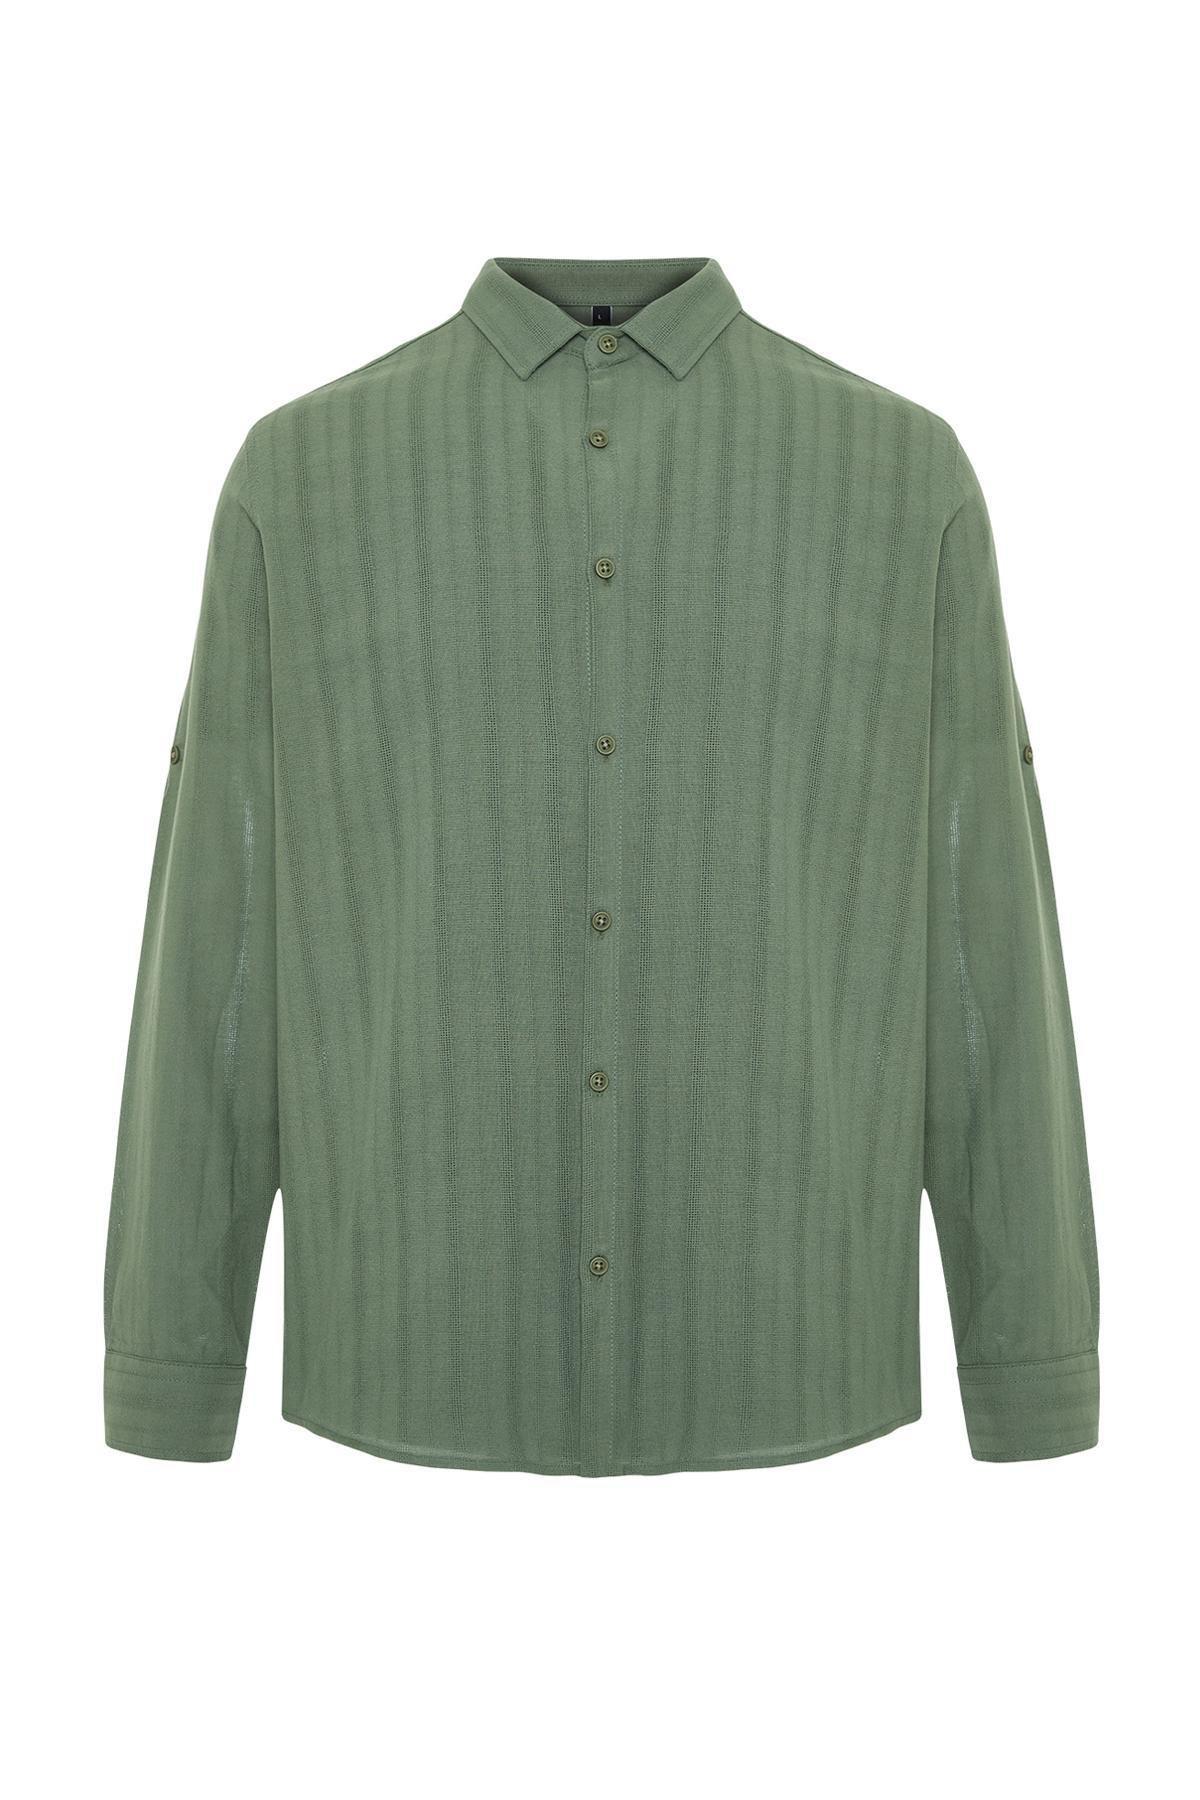 Trendyol - Khaki Etamine Textured Shirt